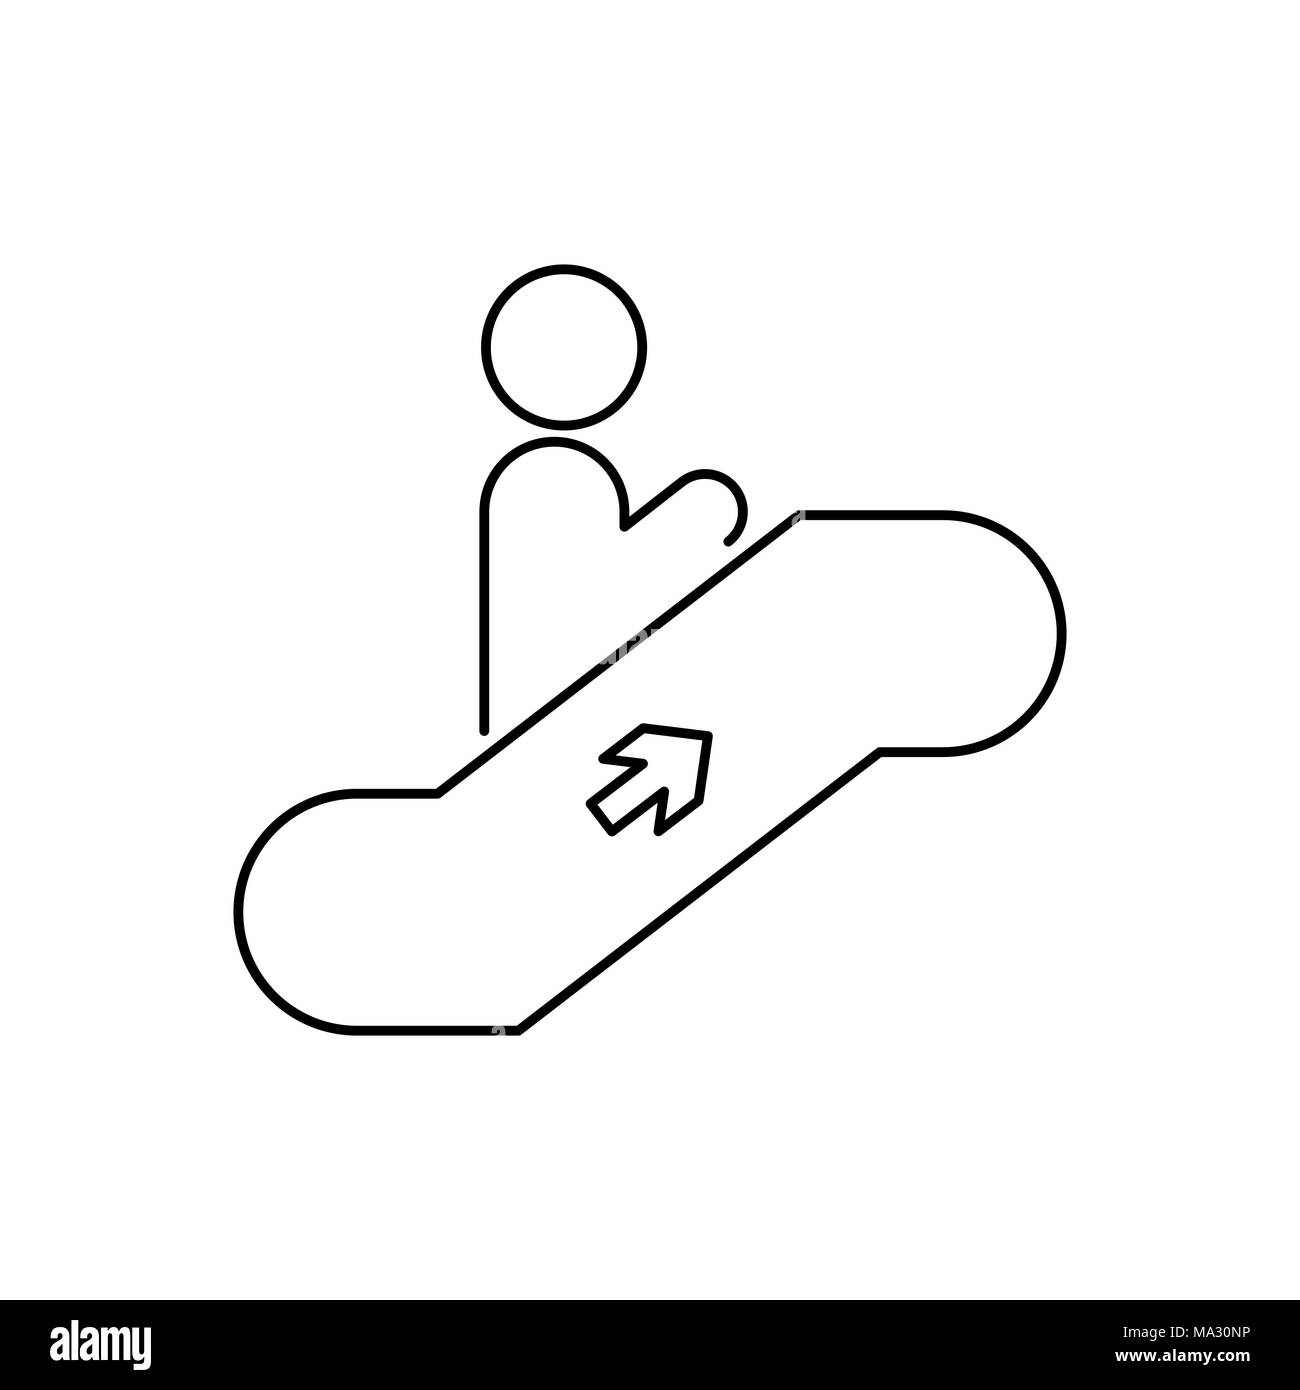 Man on escalator icon simple flat vector illustration. Stock Vector